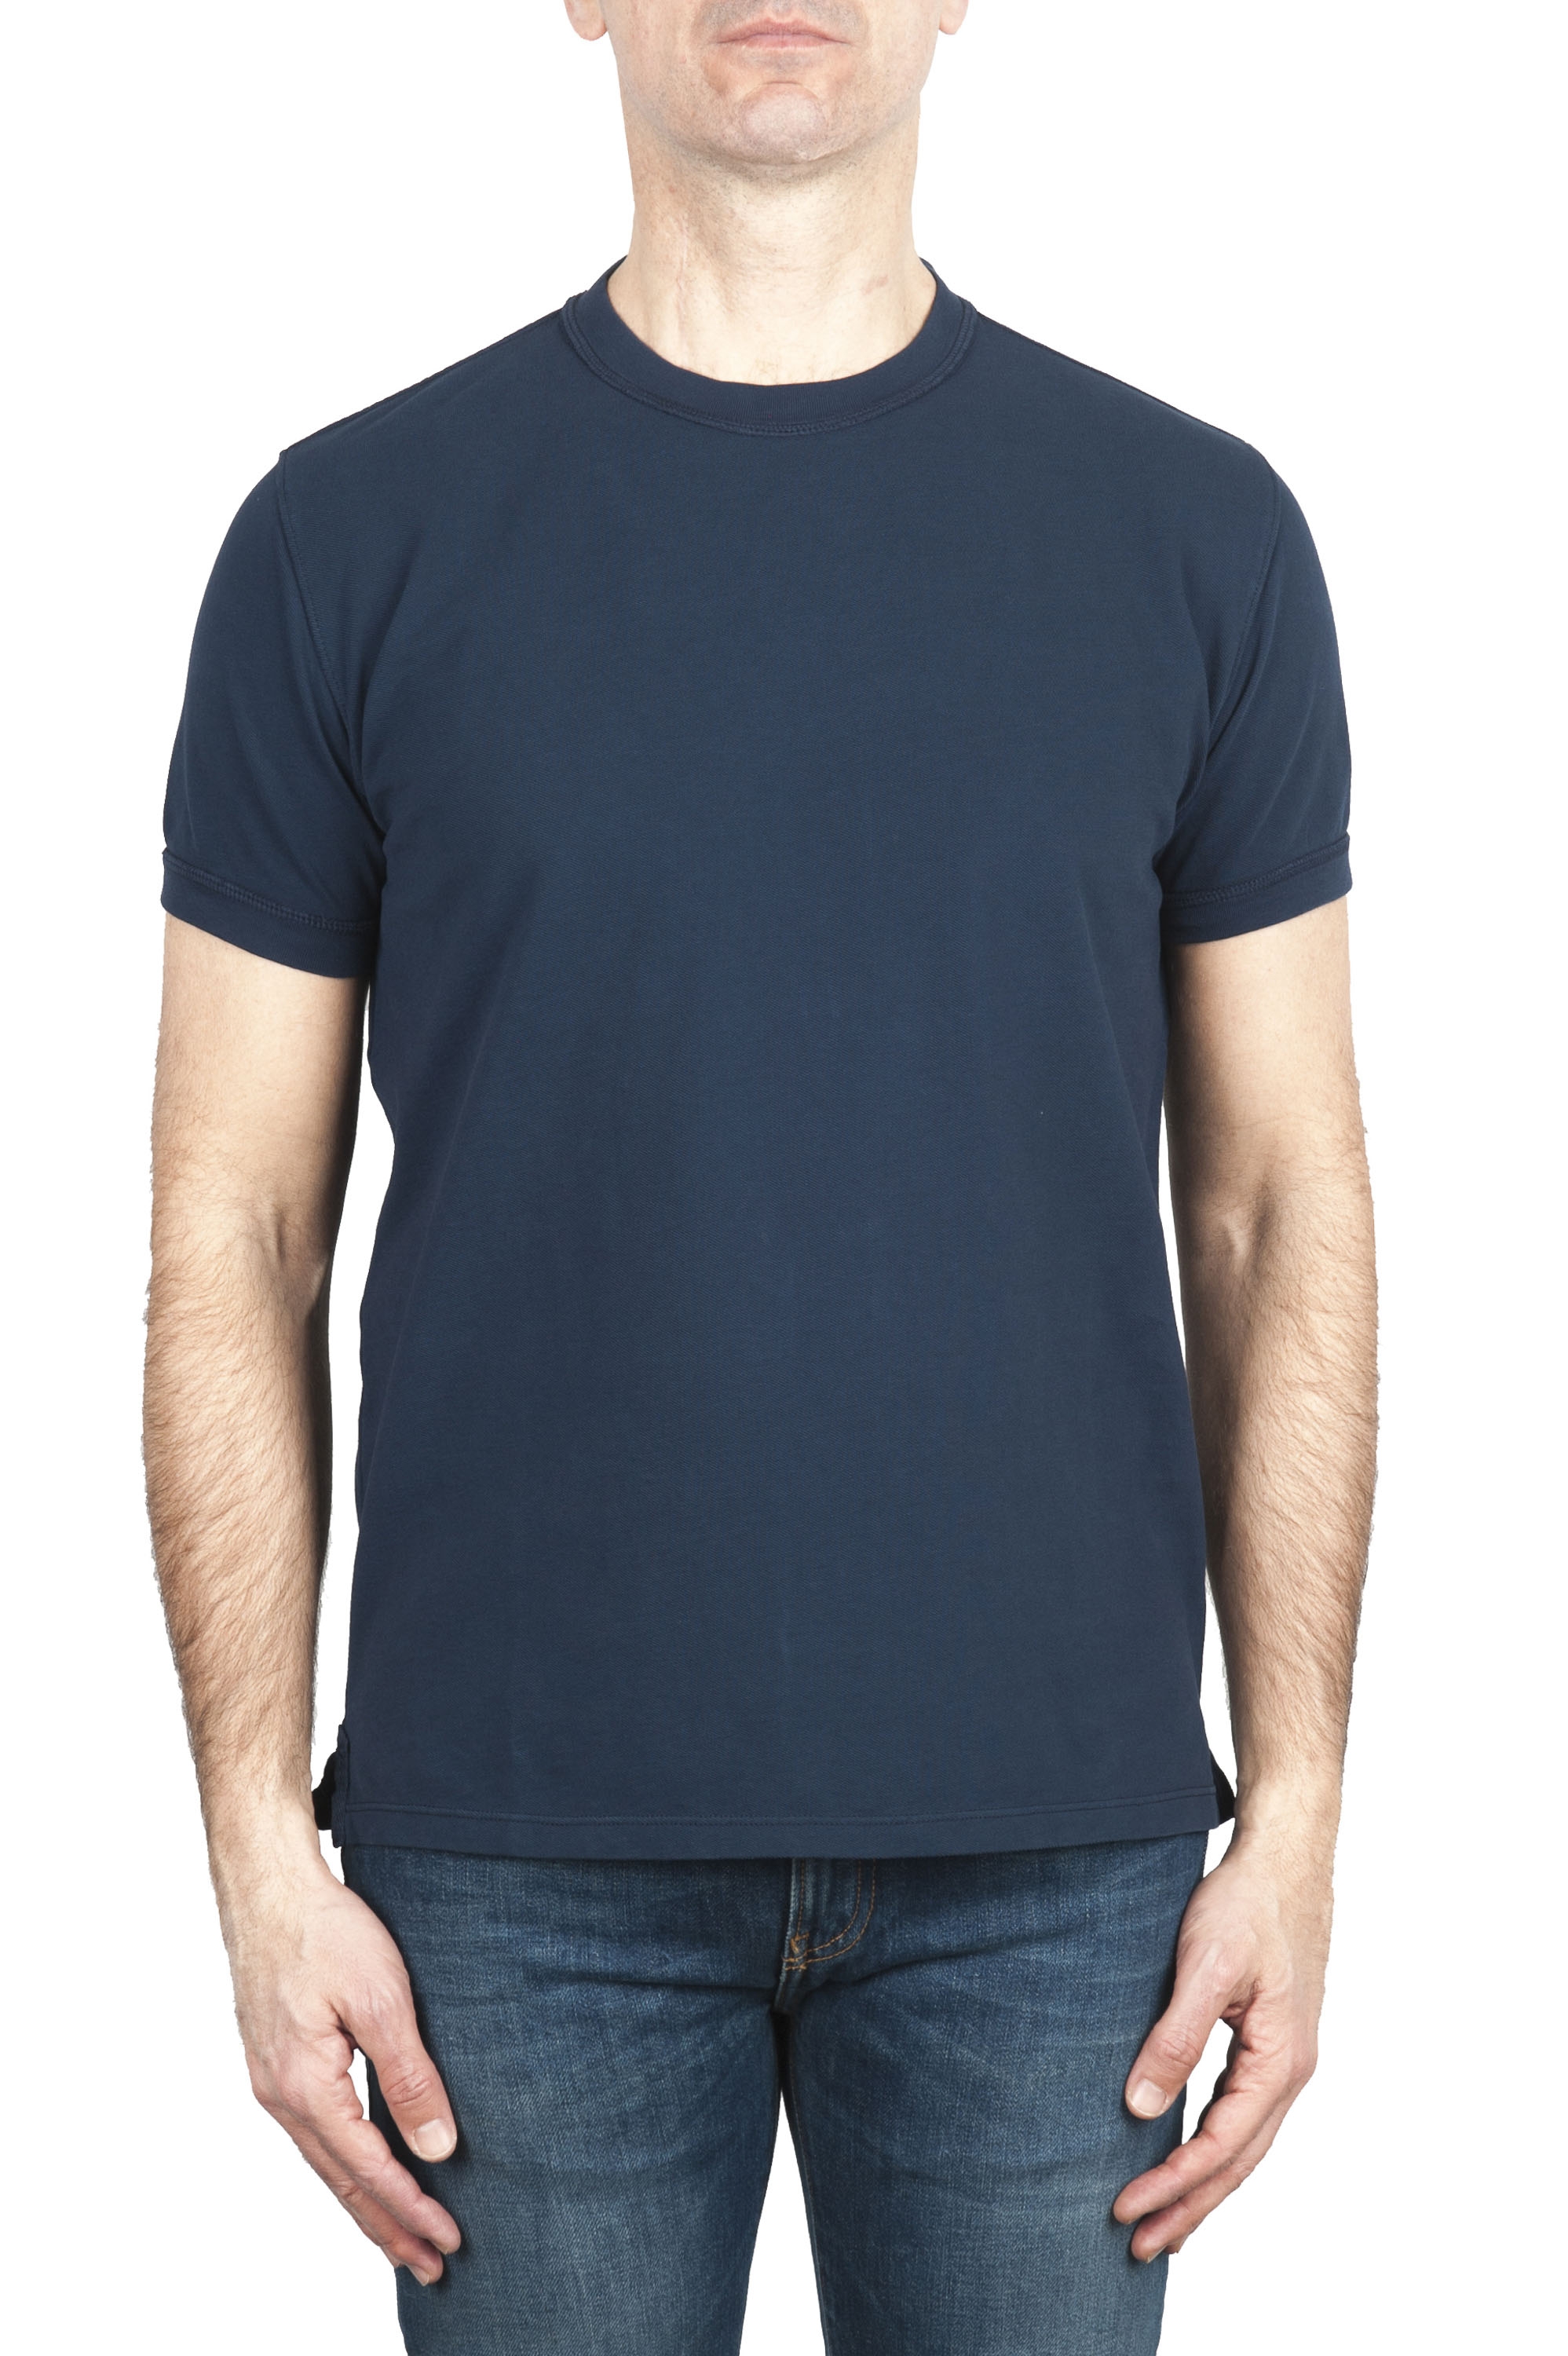 SBU 01989_2020SS Cotton pique classic t-shirt navy blue 01